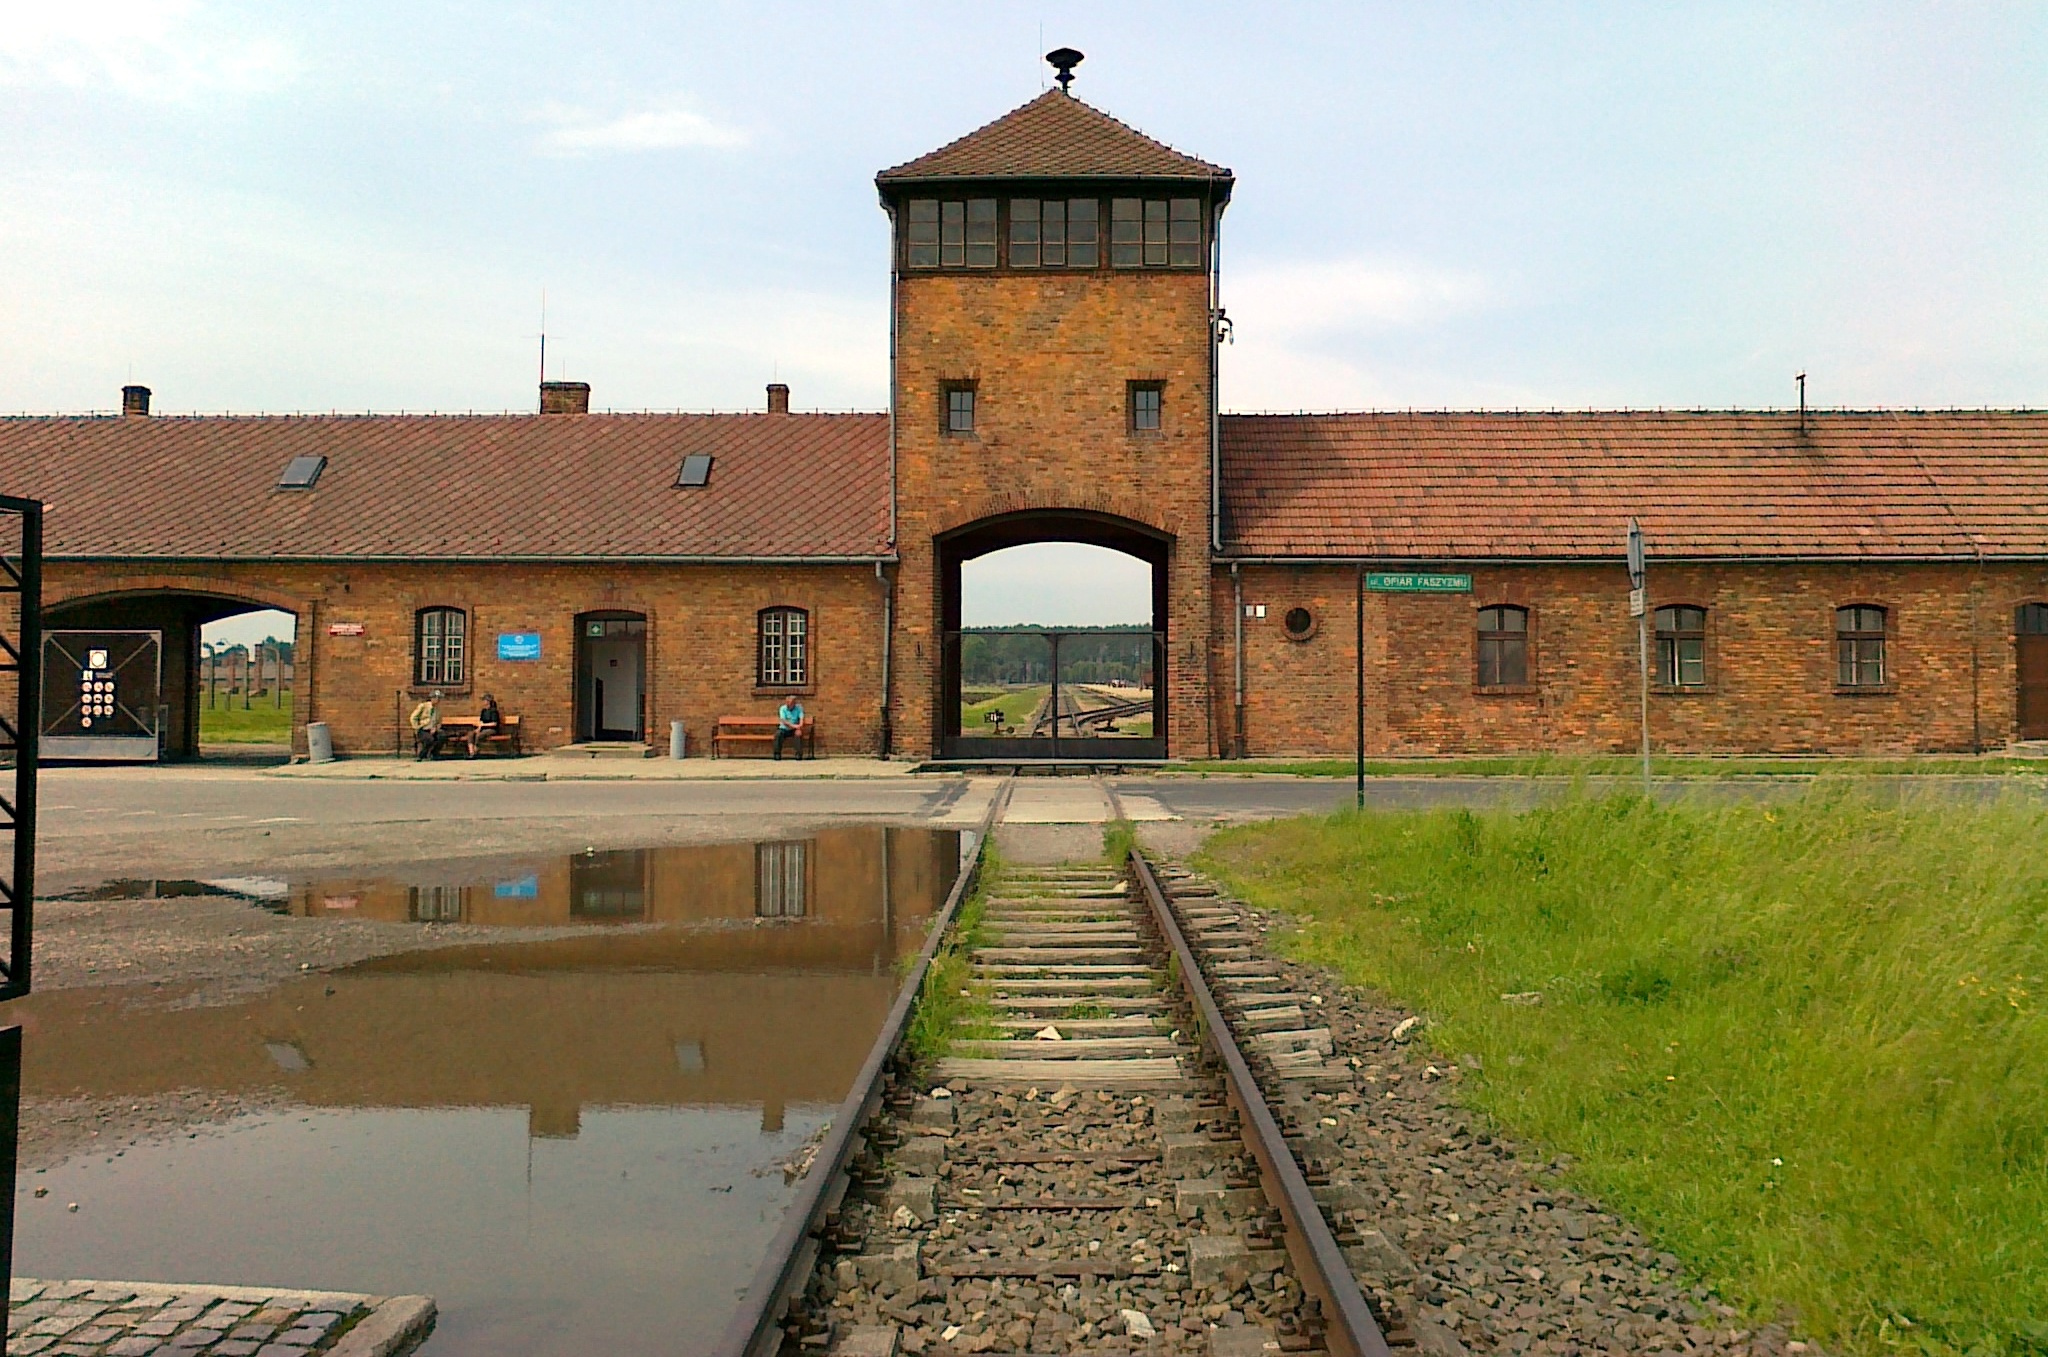 Huvudporten till Auschwitz-Birkenau. Foto: PZK.NET (CC BY-SA 3.0).